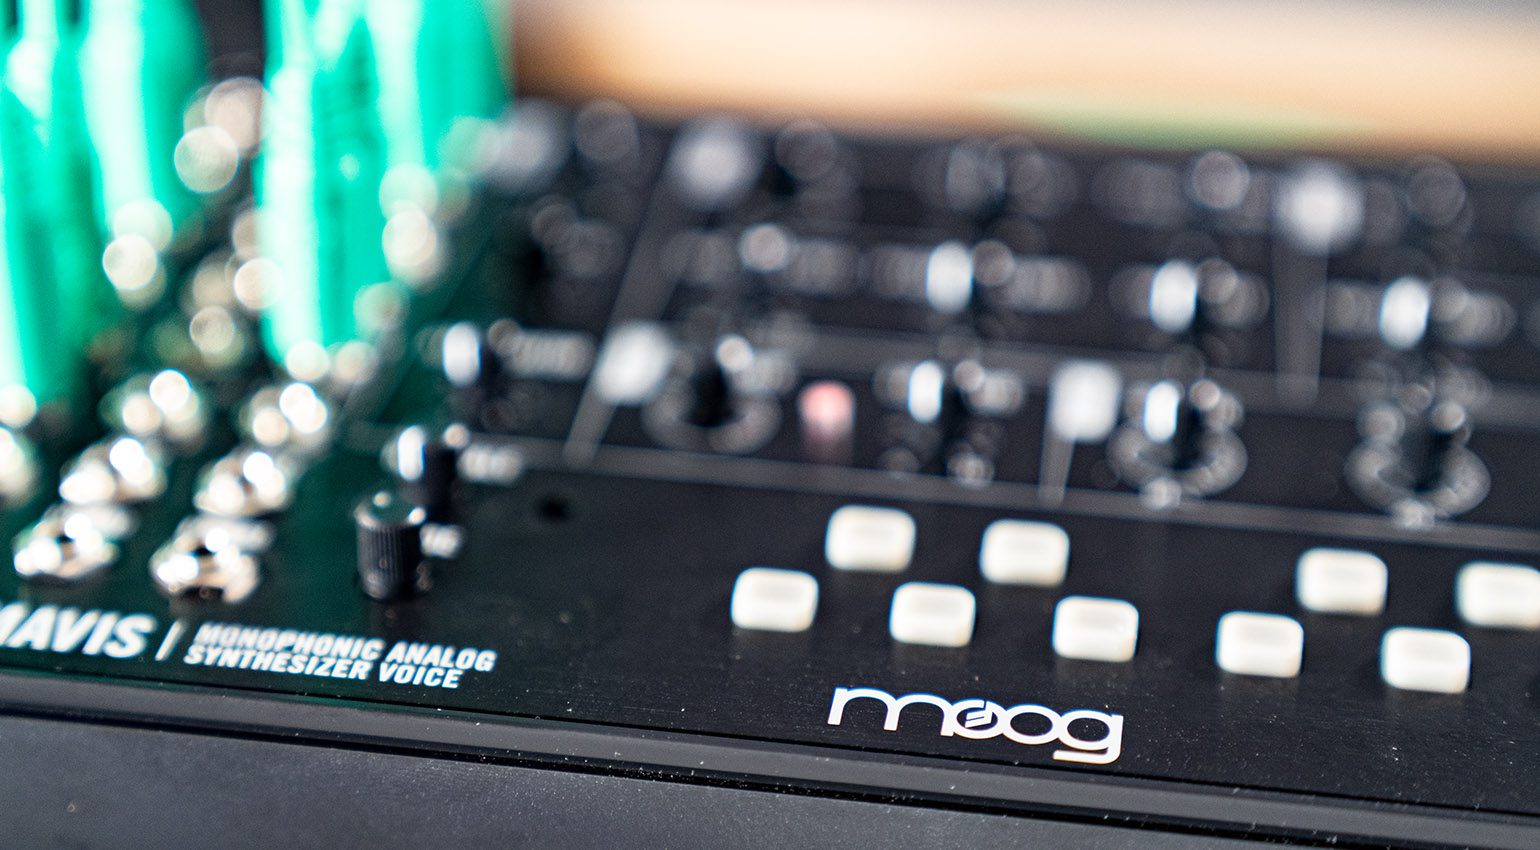 Angecheckt: Moog Mavis semi-modularer Synthesizer